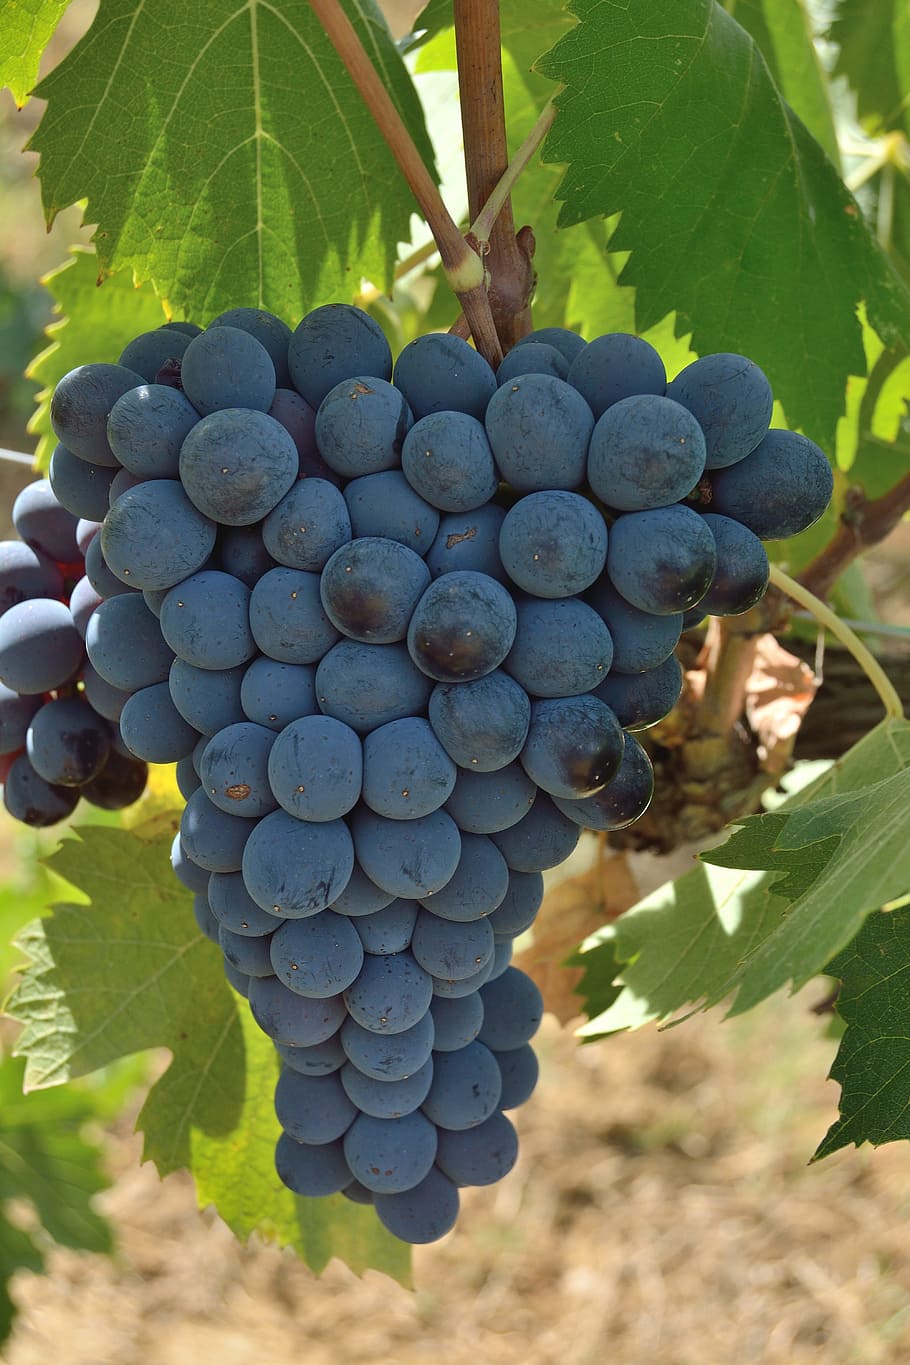 anggur, ikat, merah, tuscany, kebun anggur, sekrup, buah, asini, alam, hijau